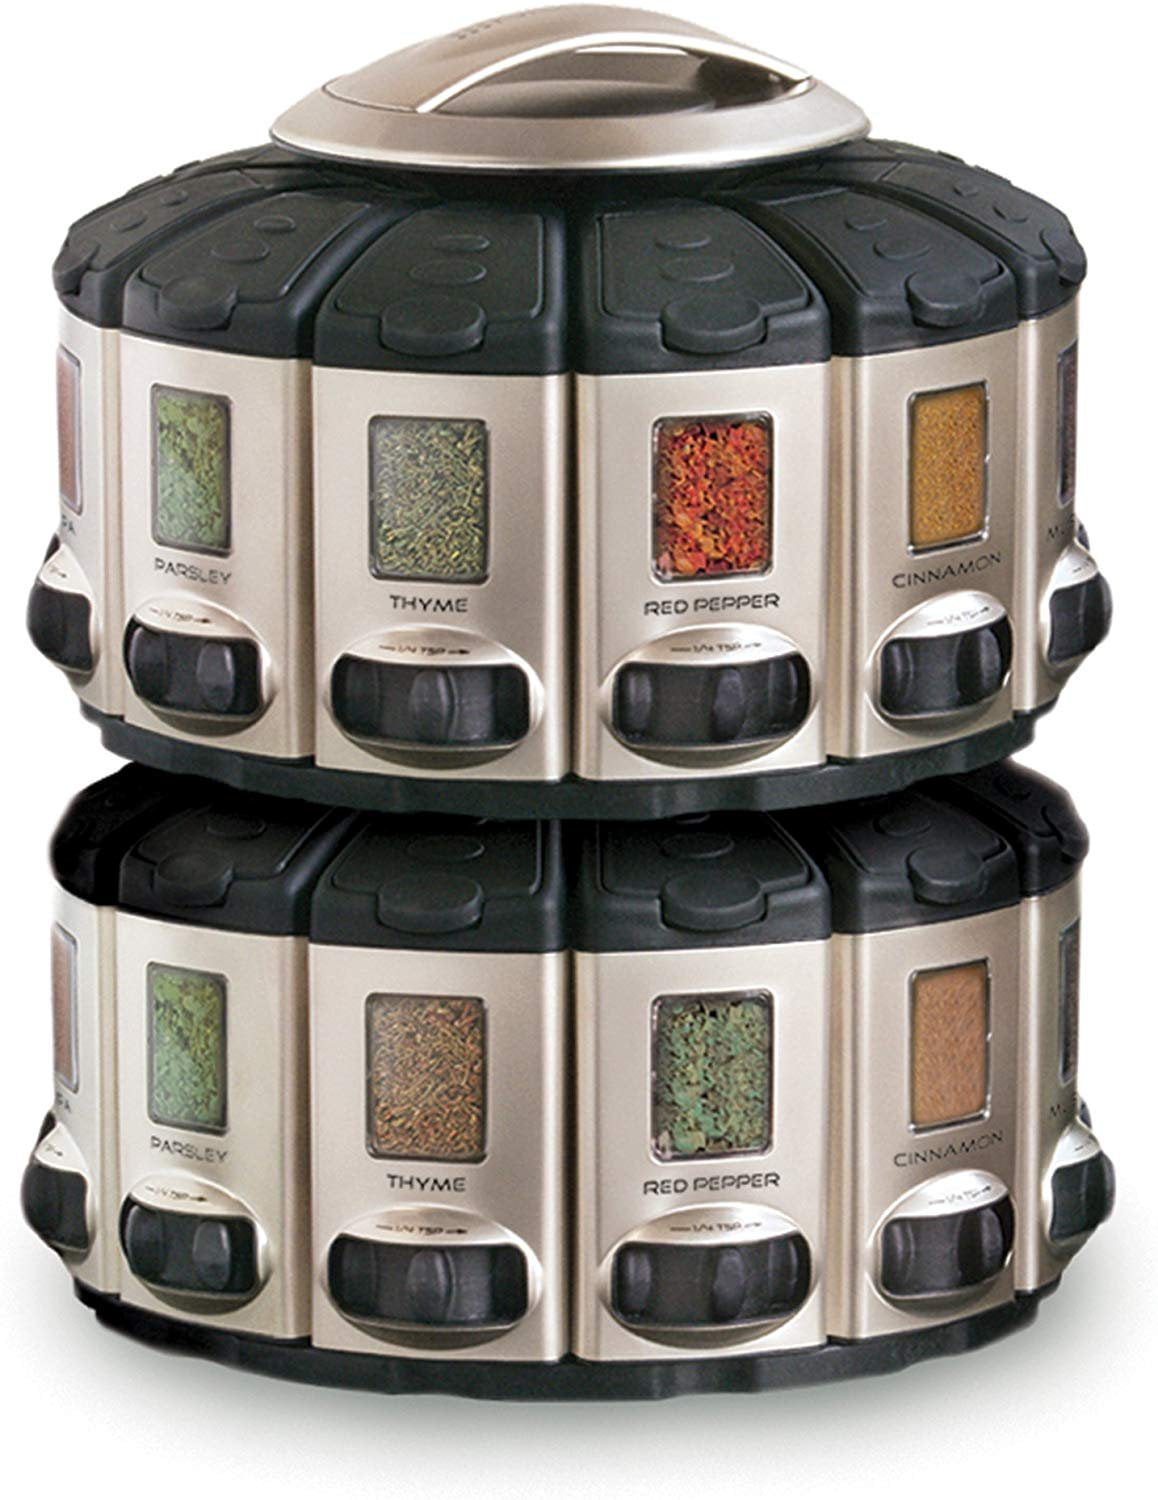 Kitchen Art Select-A-Spice Auto-Measure Pro Carousel 12 Compartments Black  9.5 x 9.5 x 6.5 inches